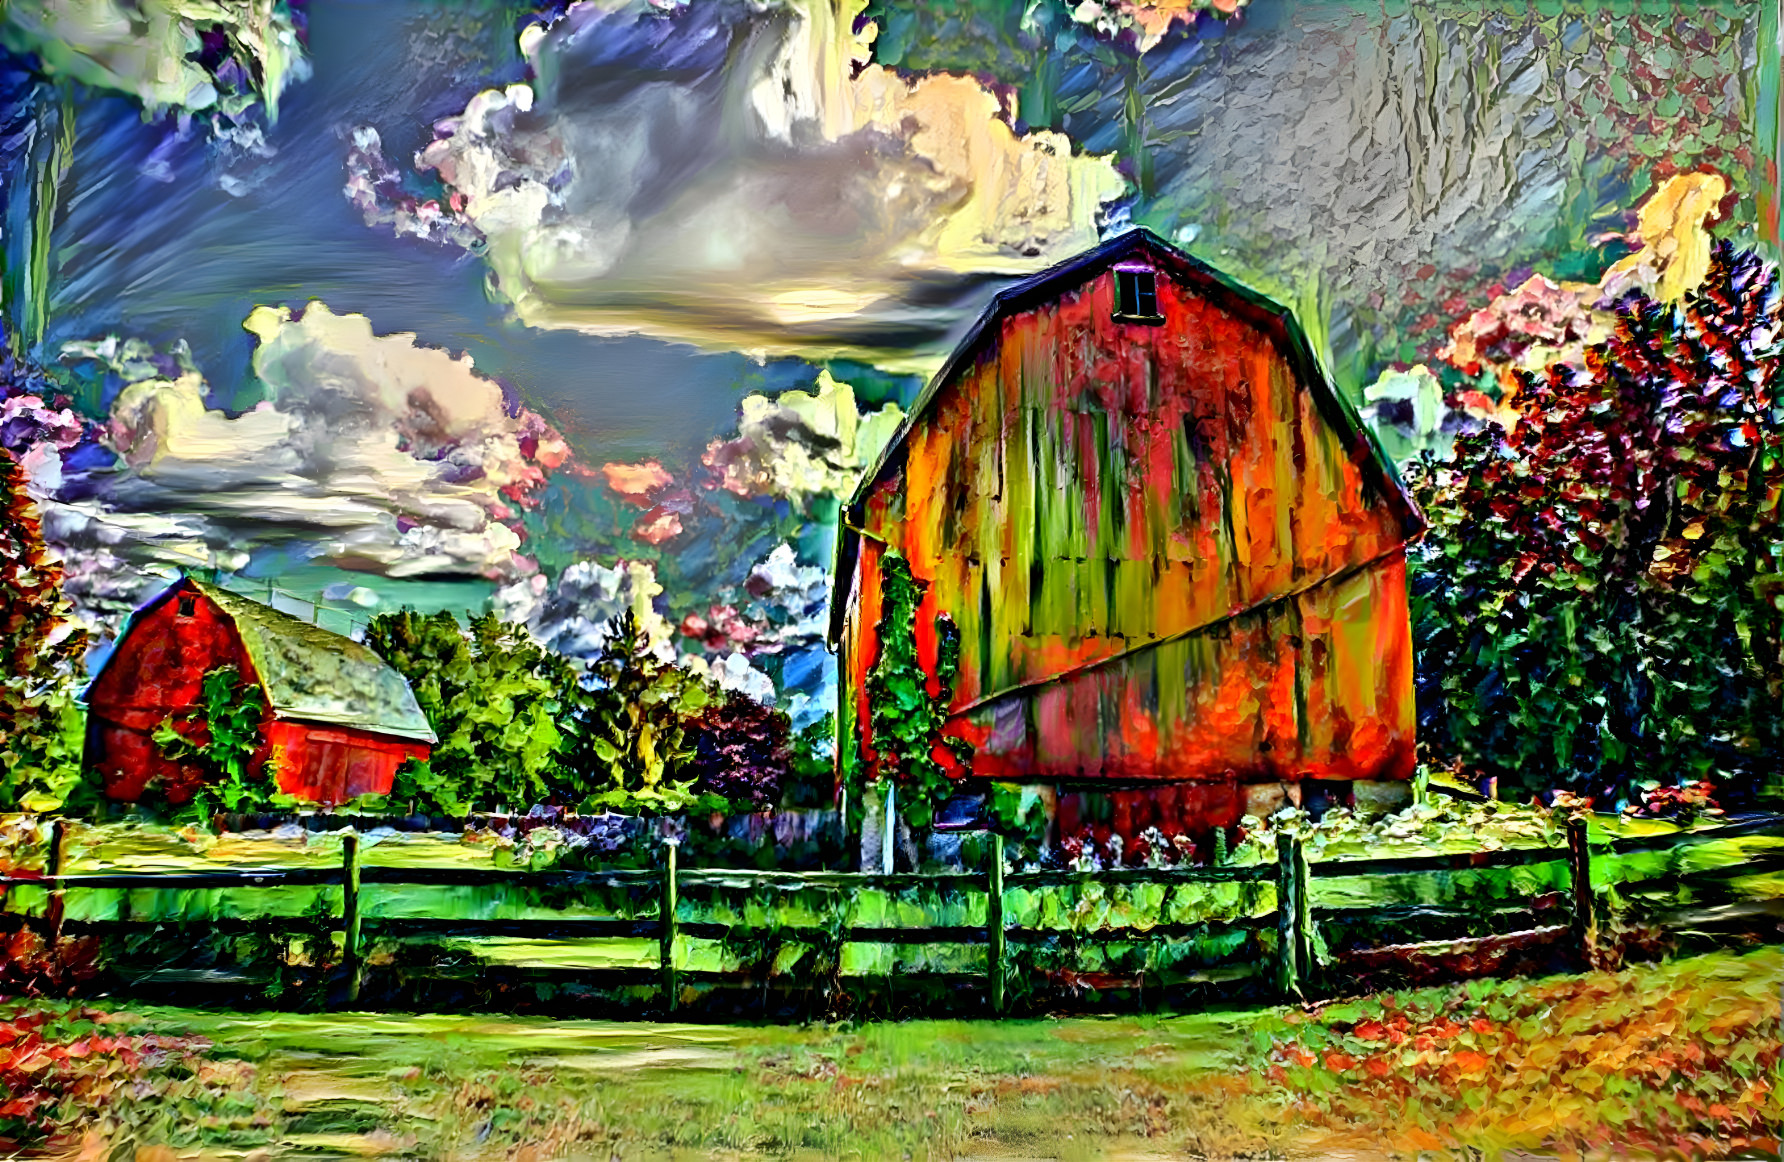 "Summer at the Farm"